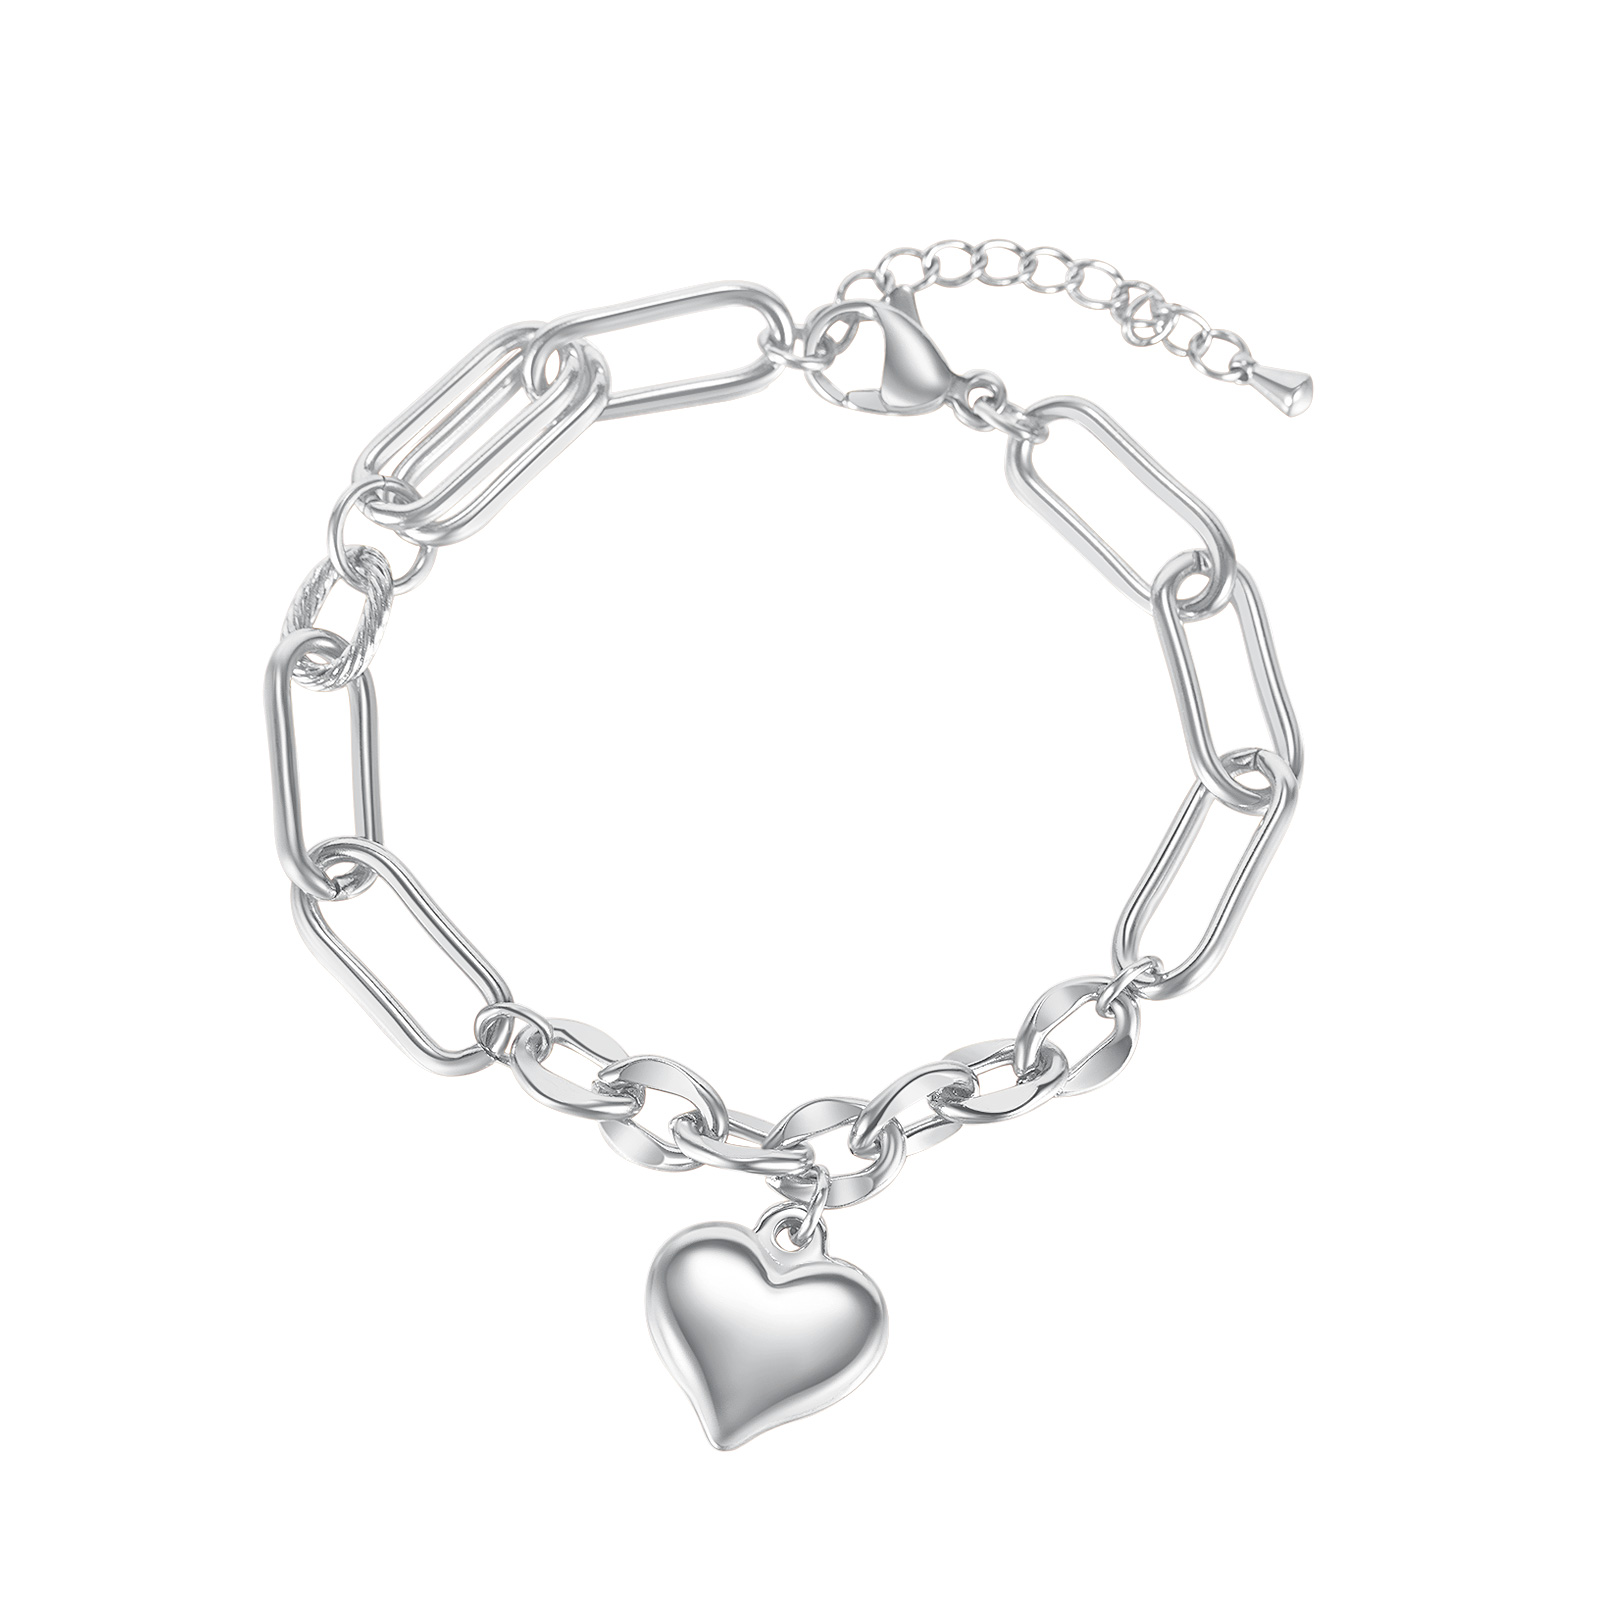 Women's Stainless Steel Chain Bracelet